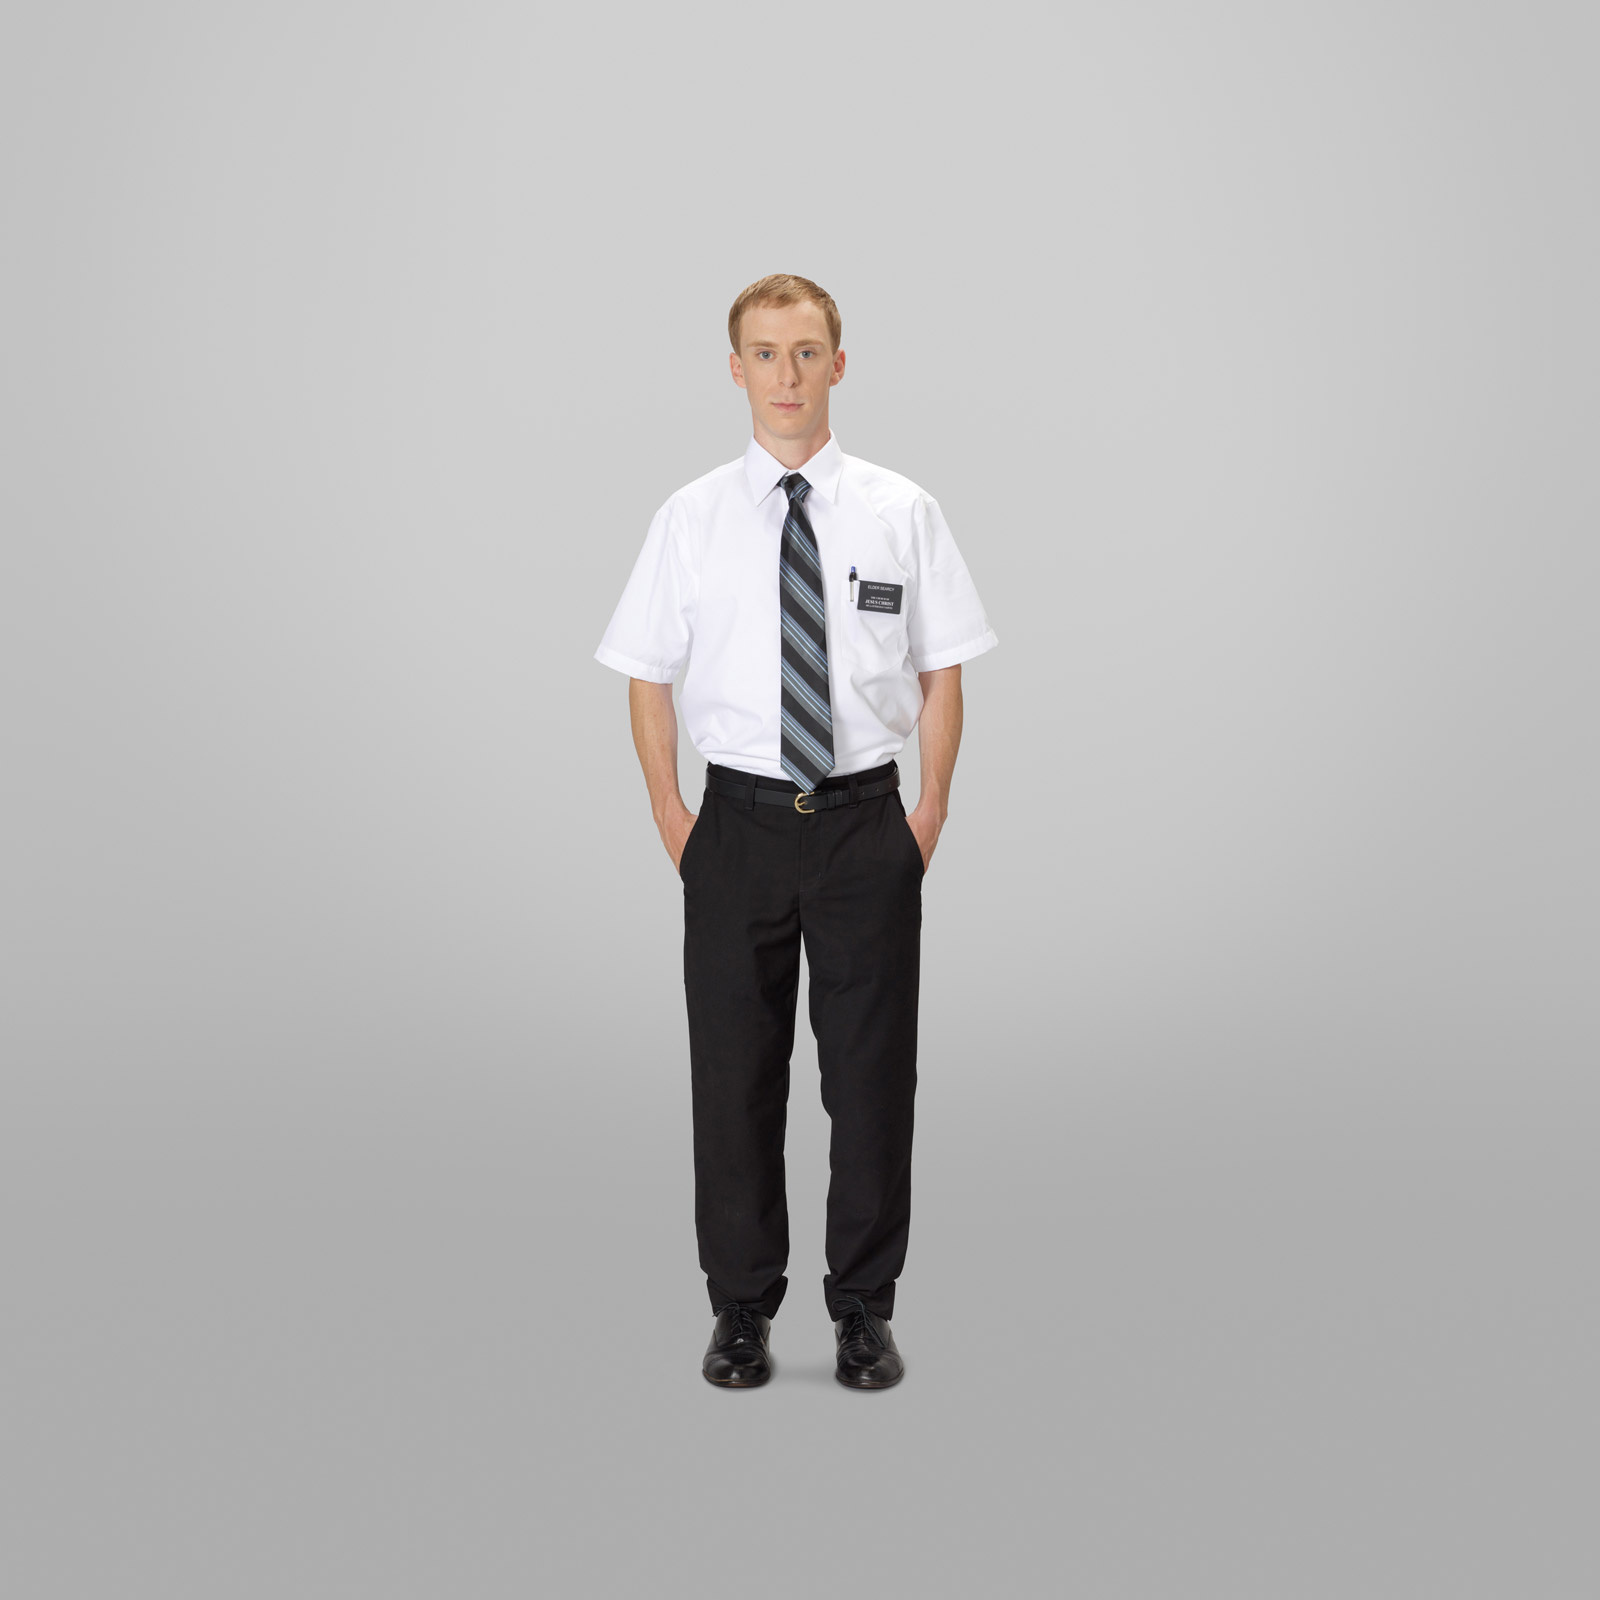 Mormon_Missionary_Positions_Neil_DaCosta_3.jpg